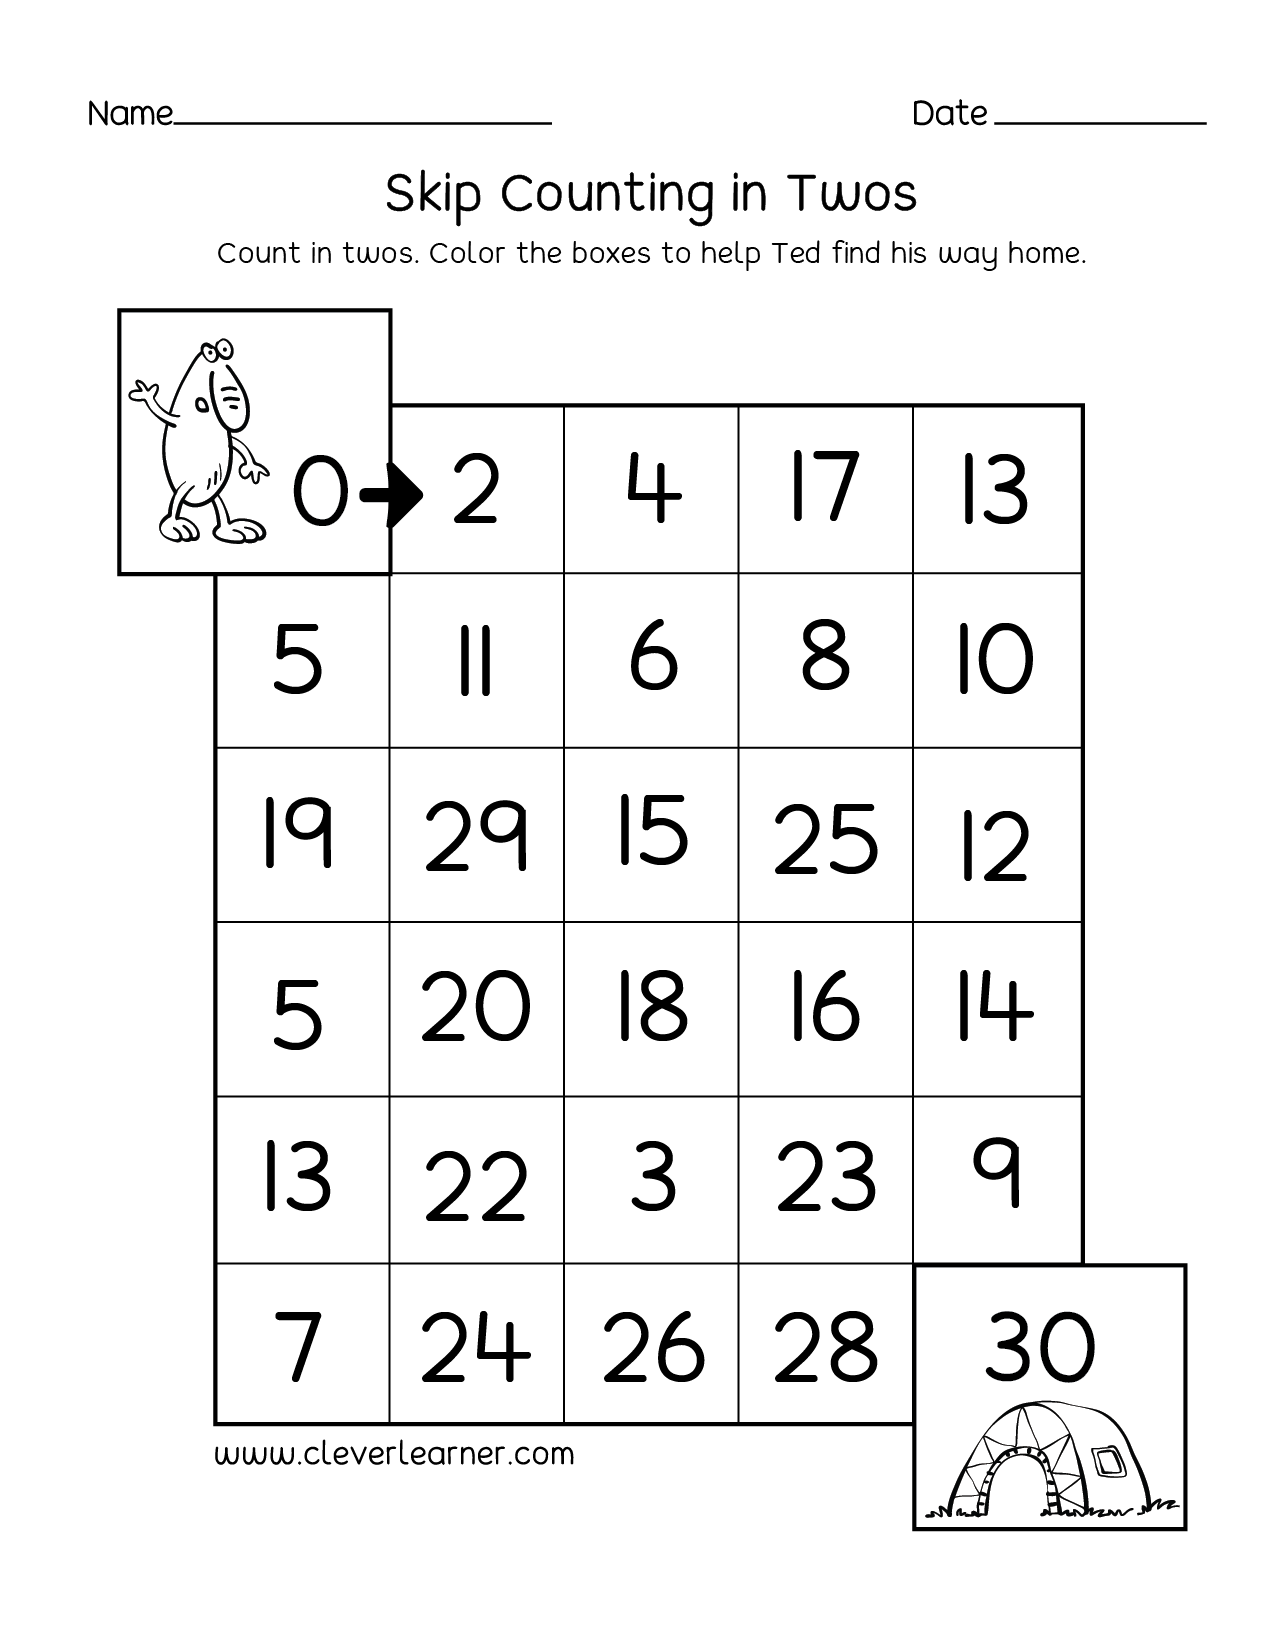 skip-counting-by-twos-worksheet